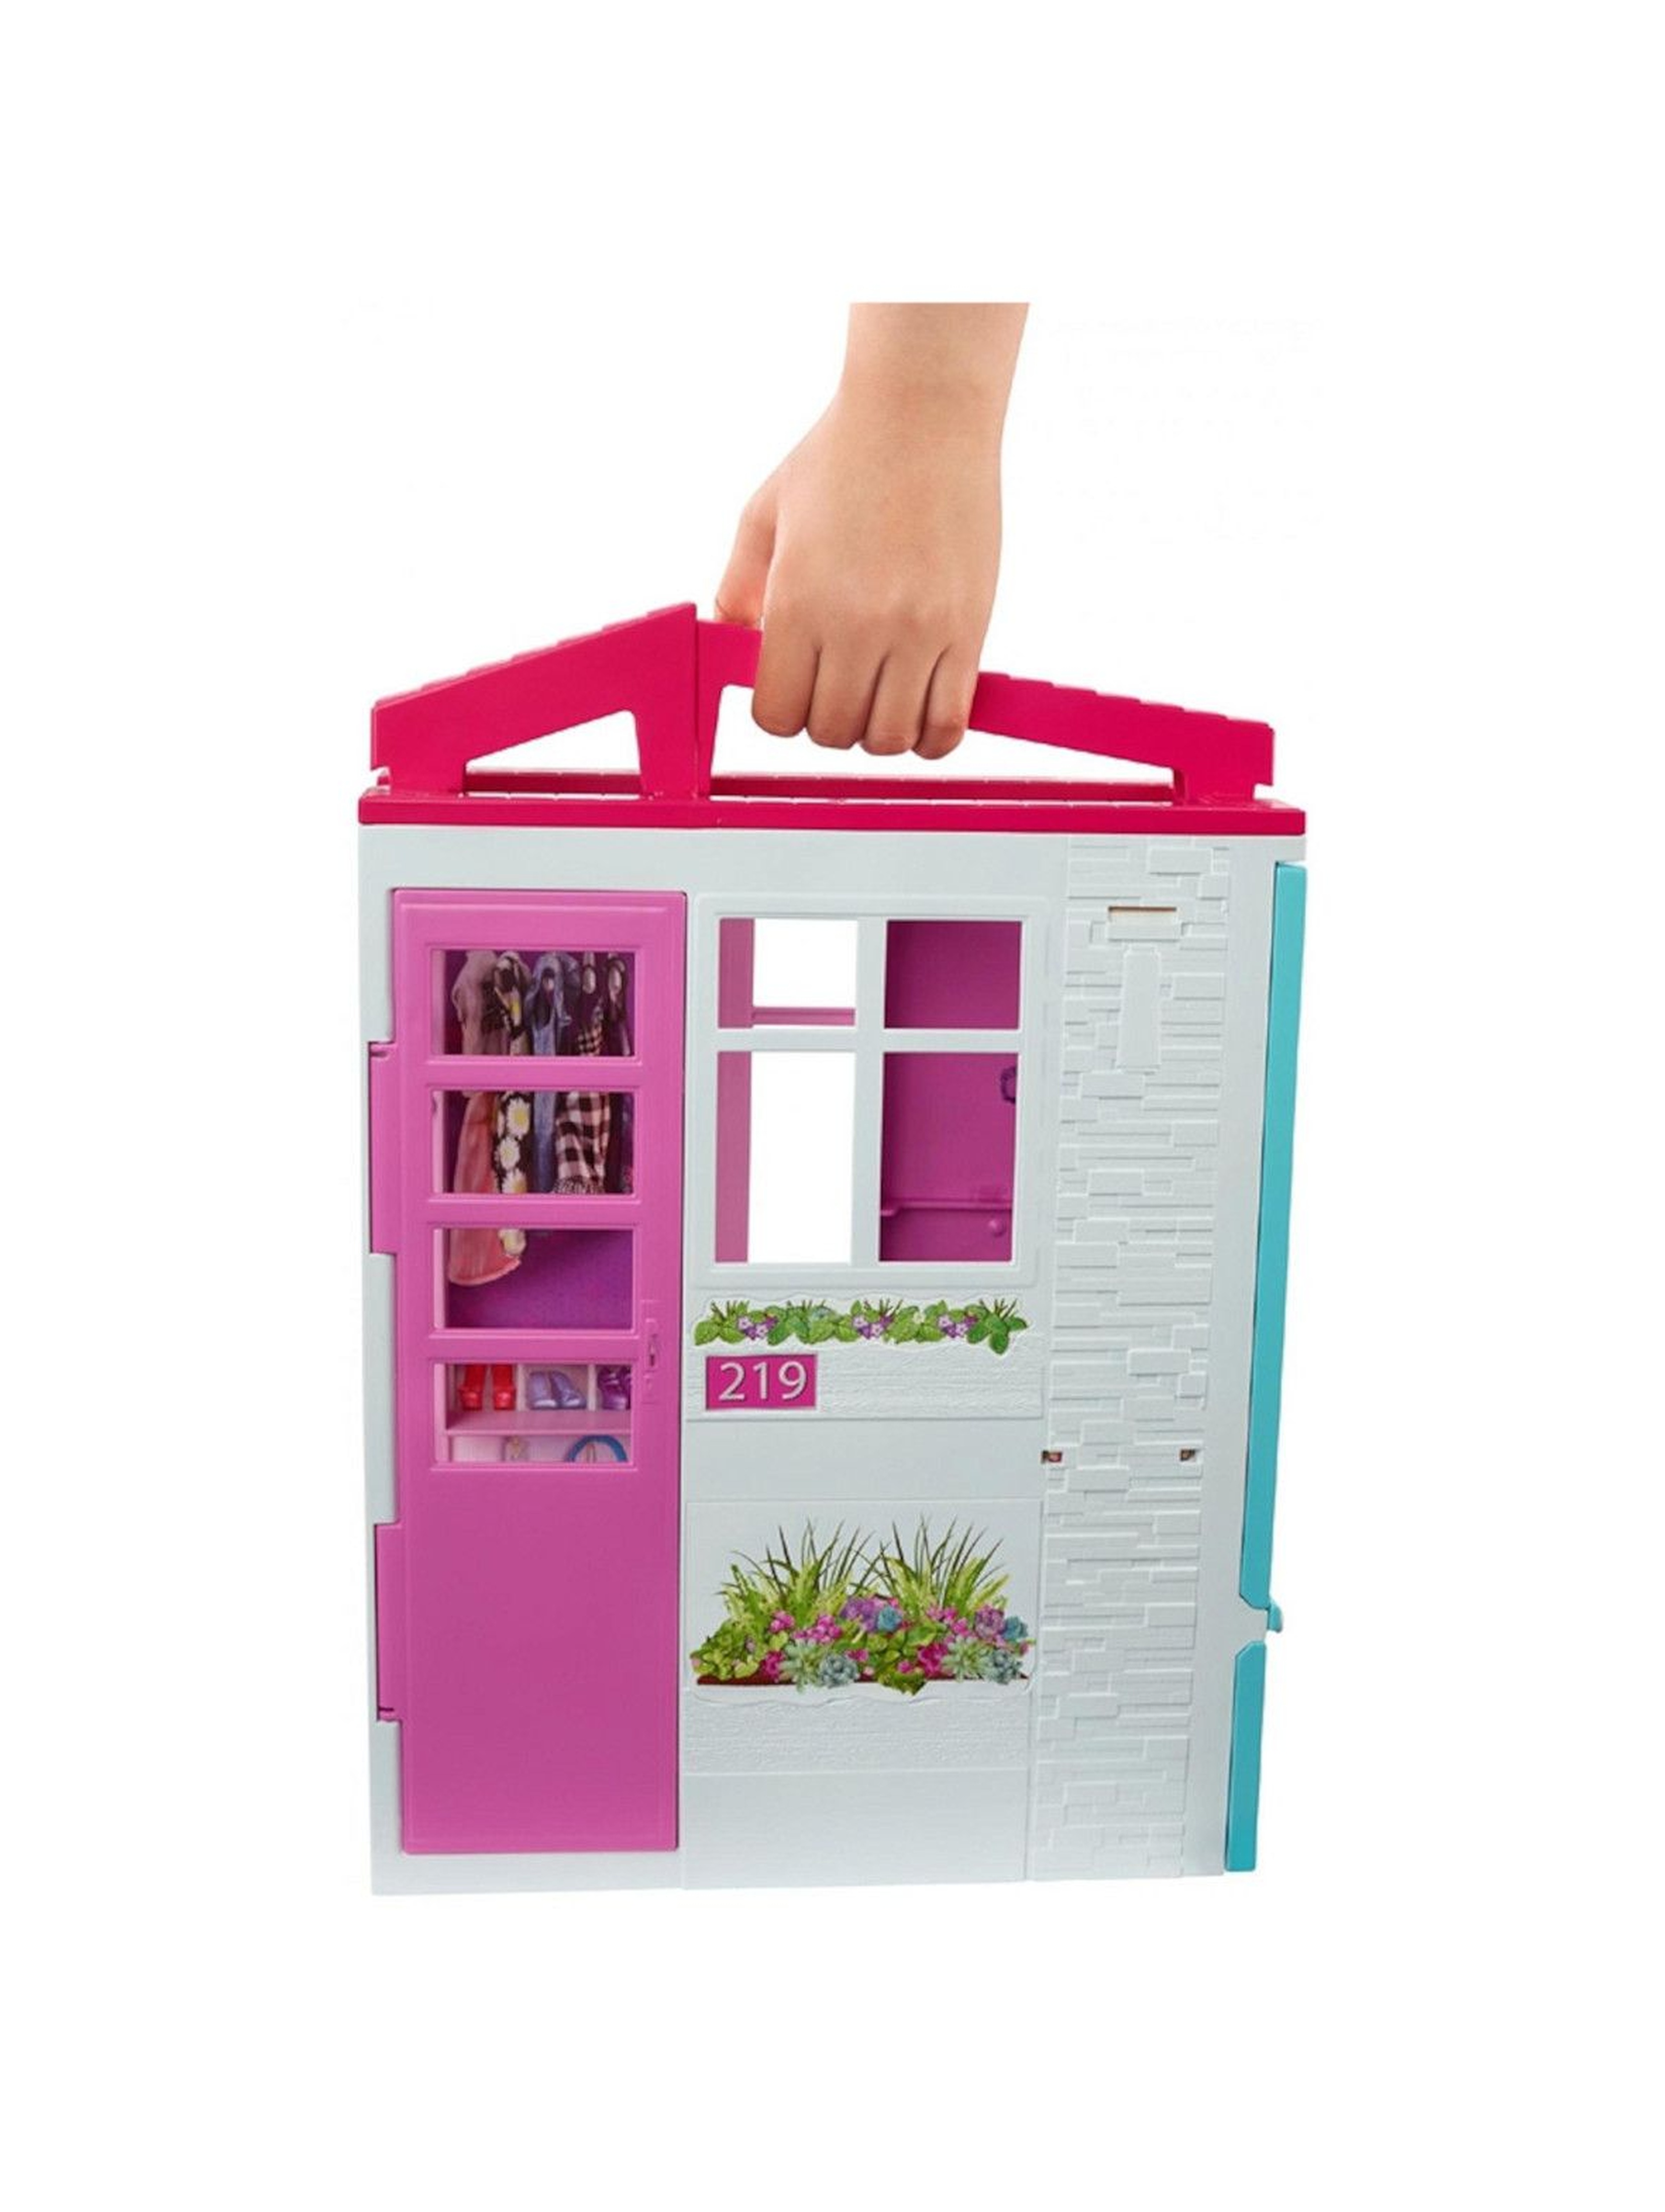 Barbie - Domek dla lalek wiek 3+